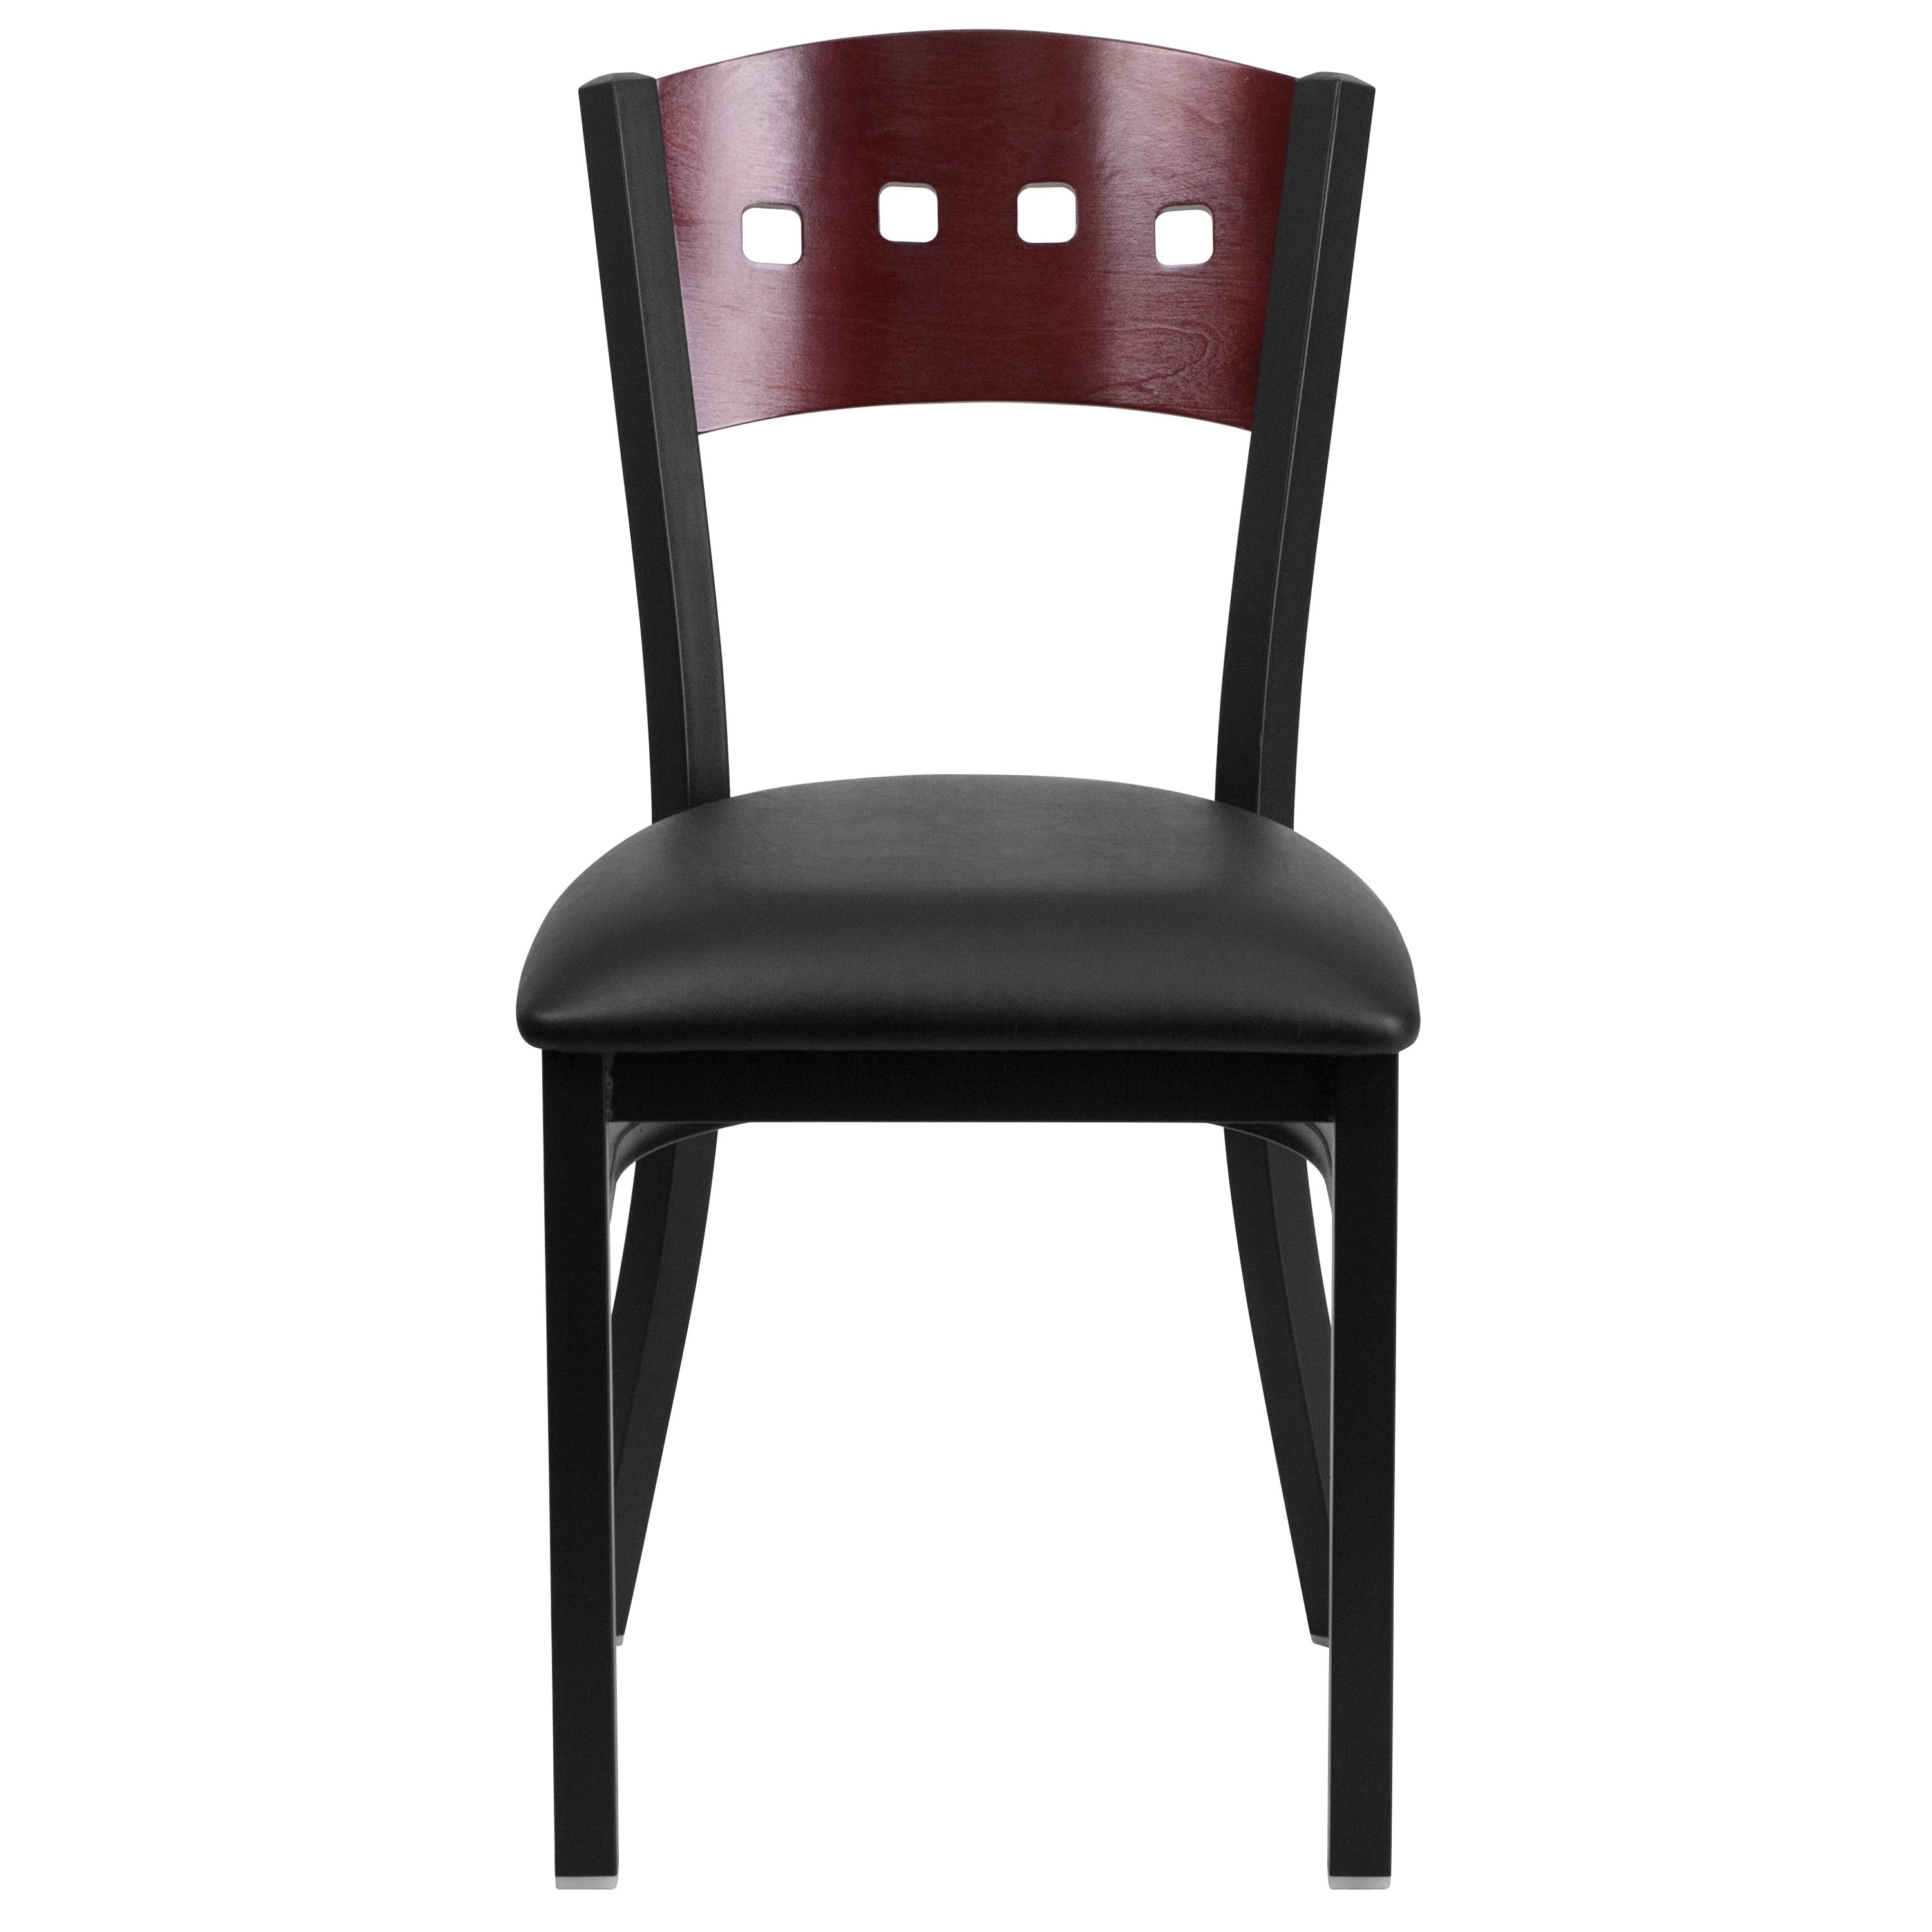 Decorative 4 Square Back Metal Restaurant Chair-Metal Restaurant Chair-Flash Furniture-Wall2Wall Furnishings